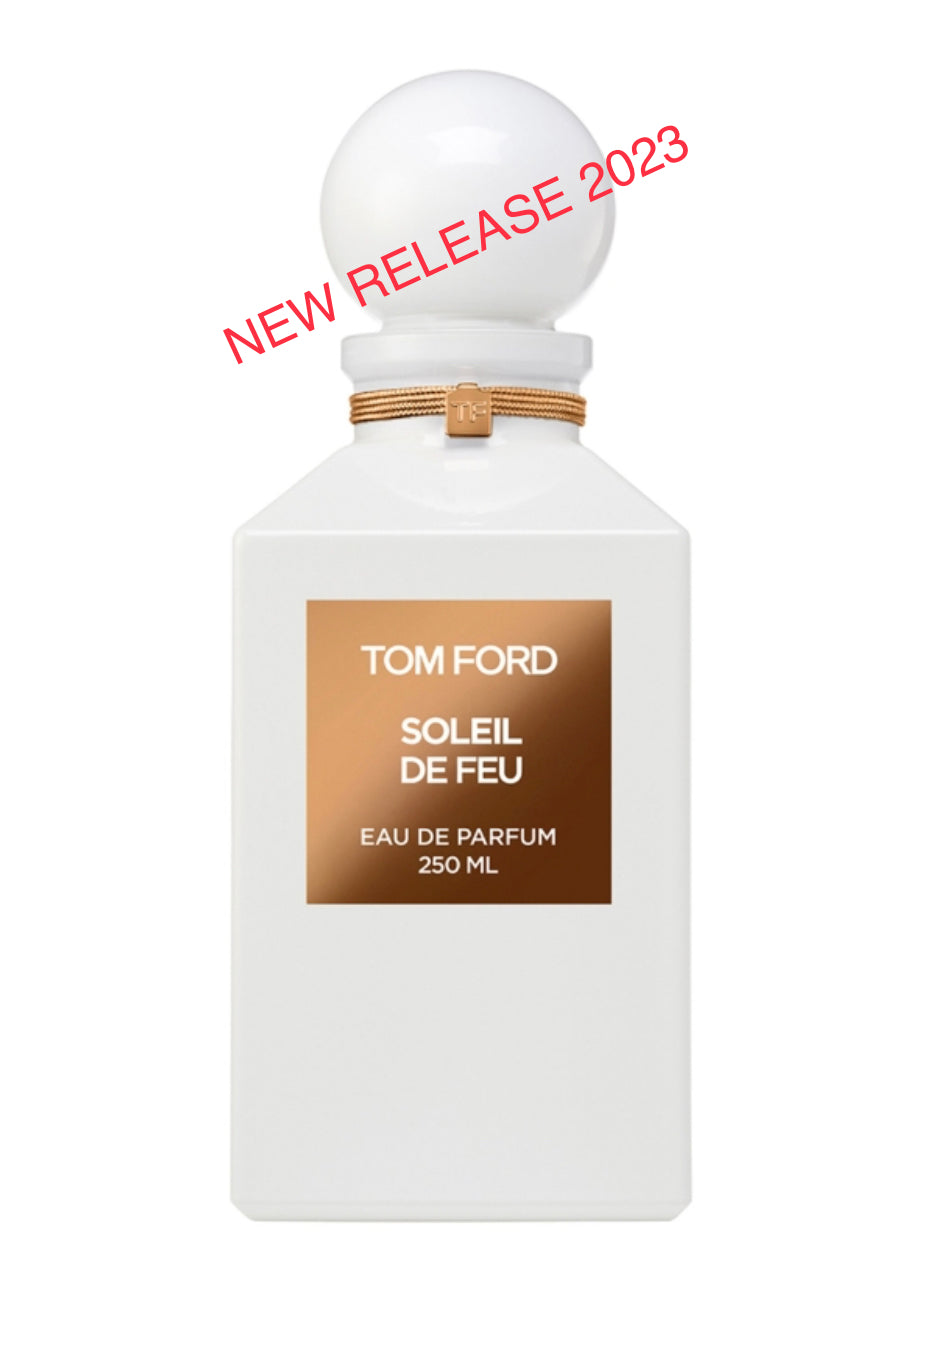 Tom Ford Soleil De Feu Eau De Parfum Samples